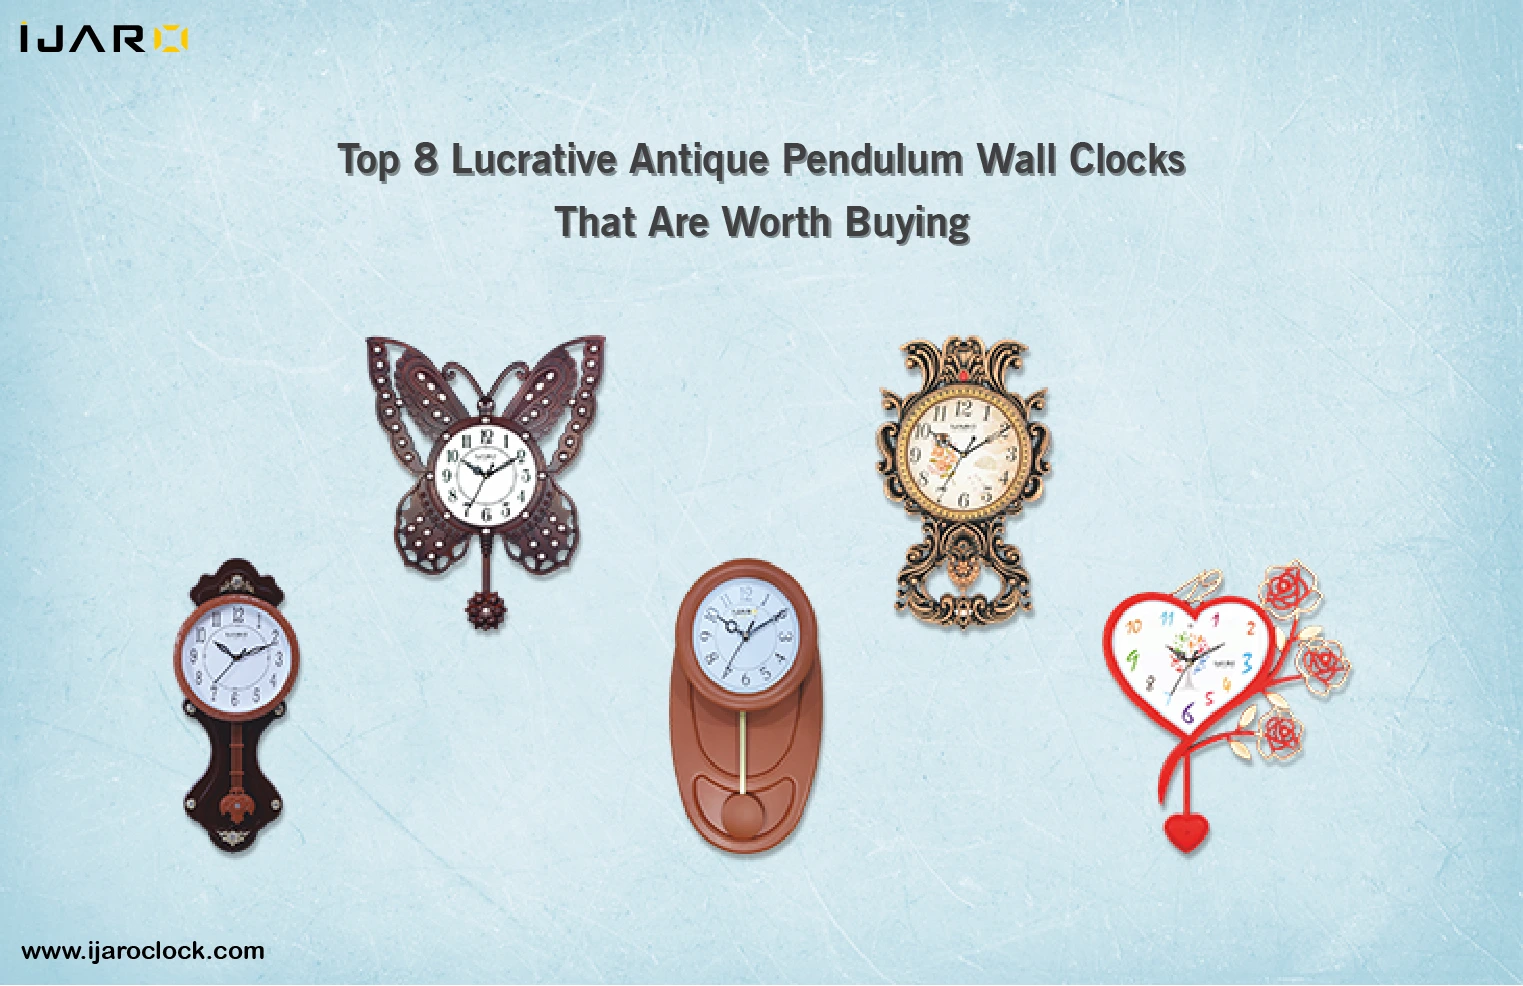 Top 8 Lucrative Antique Pendulum Wall Clocks